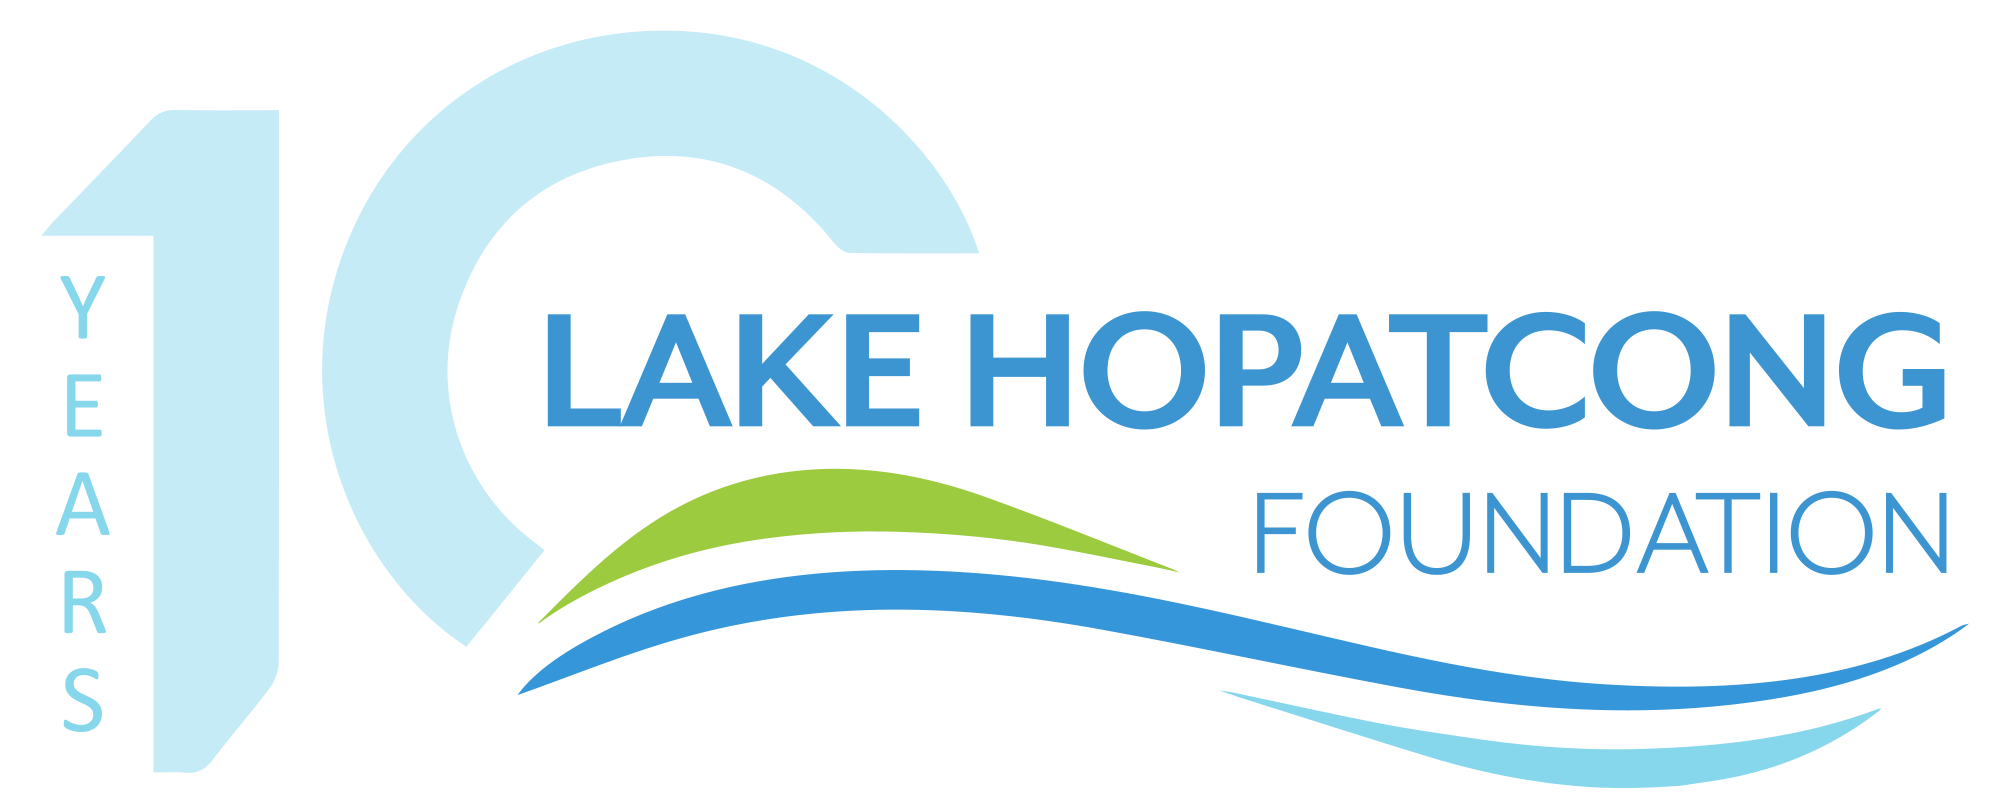 Lake Hopatcong Foundation 10 Years